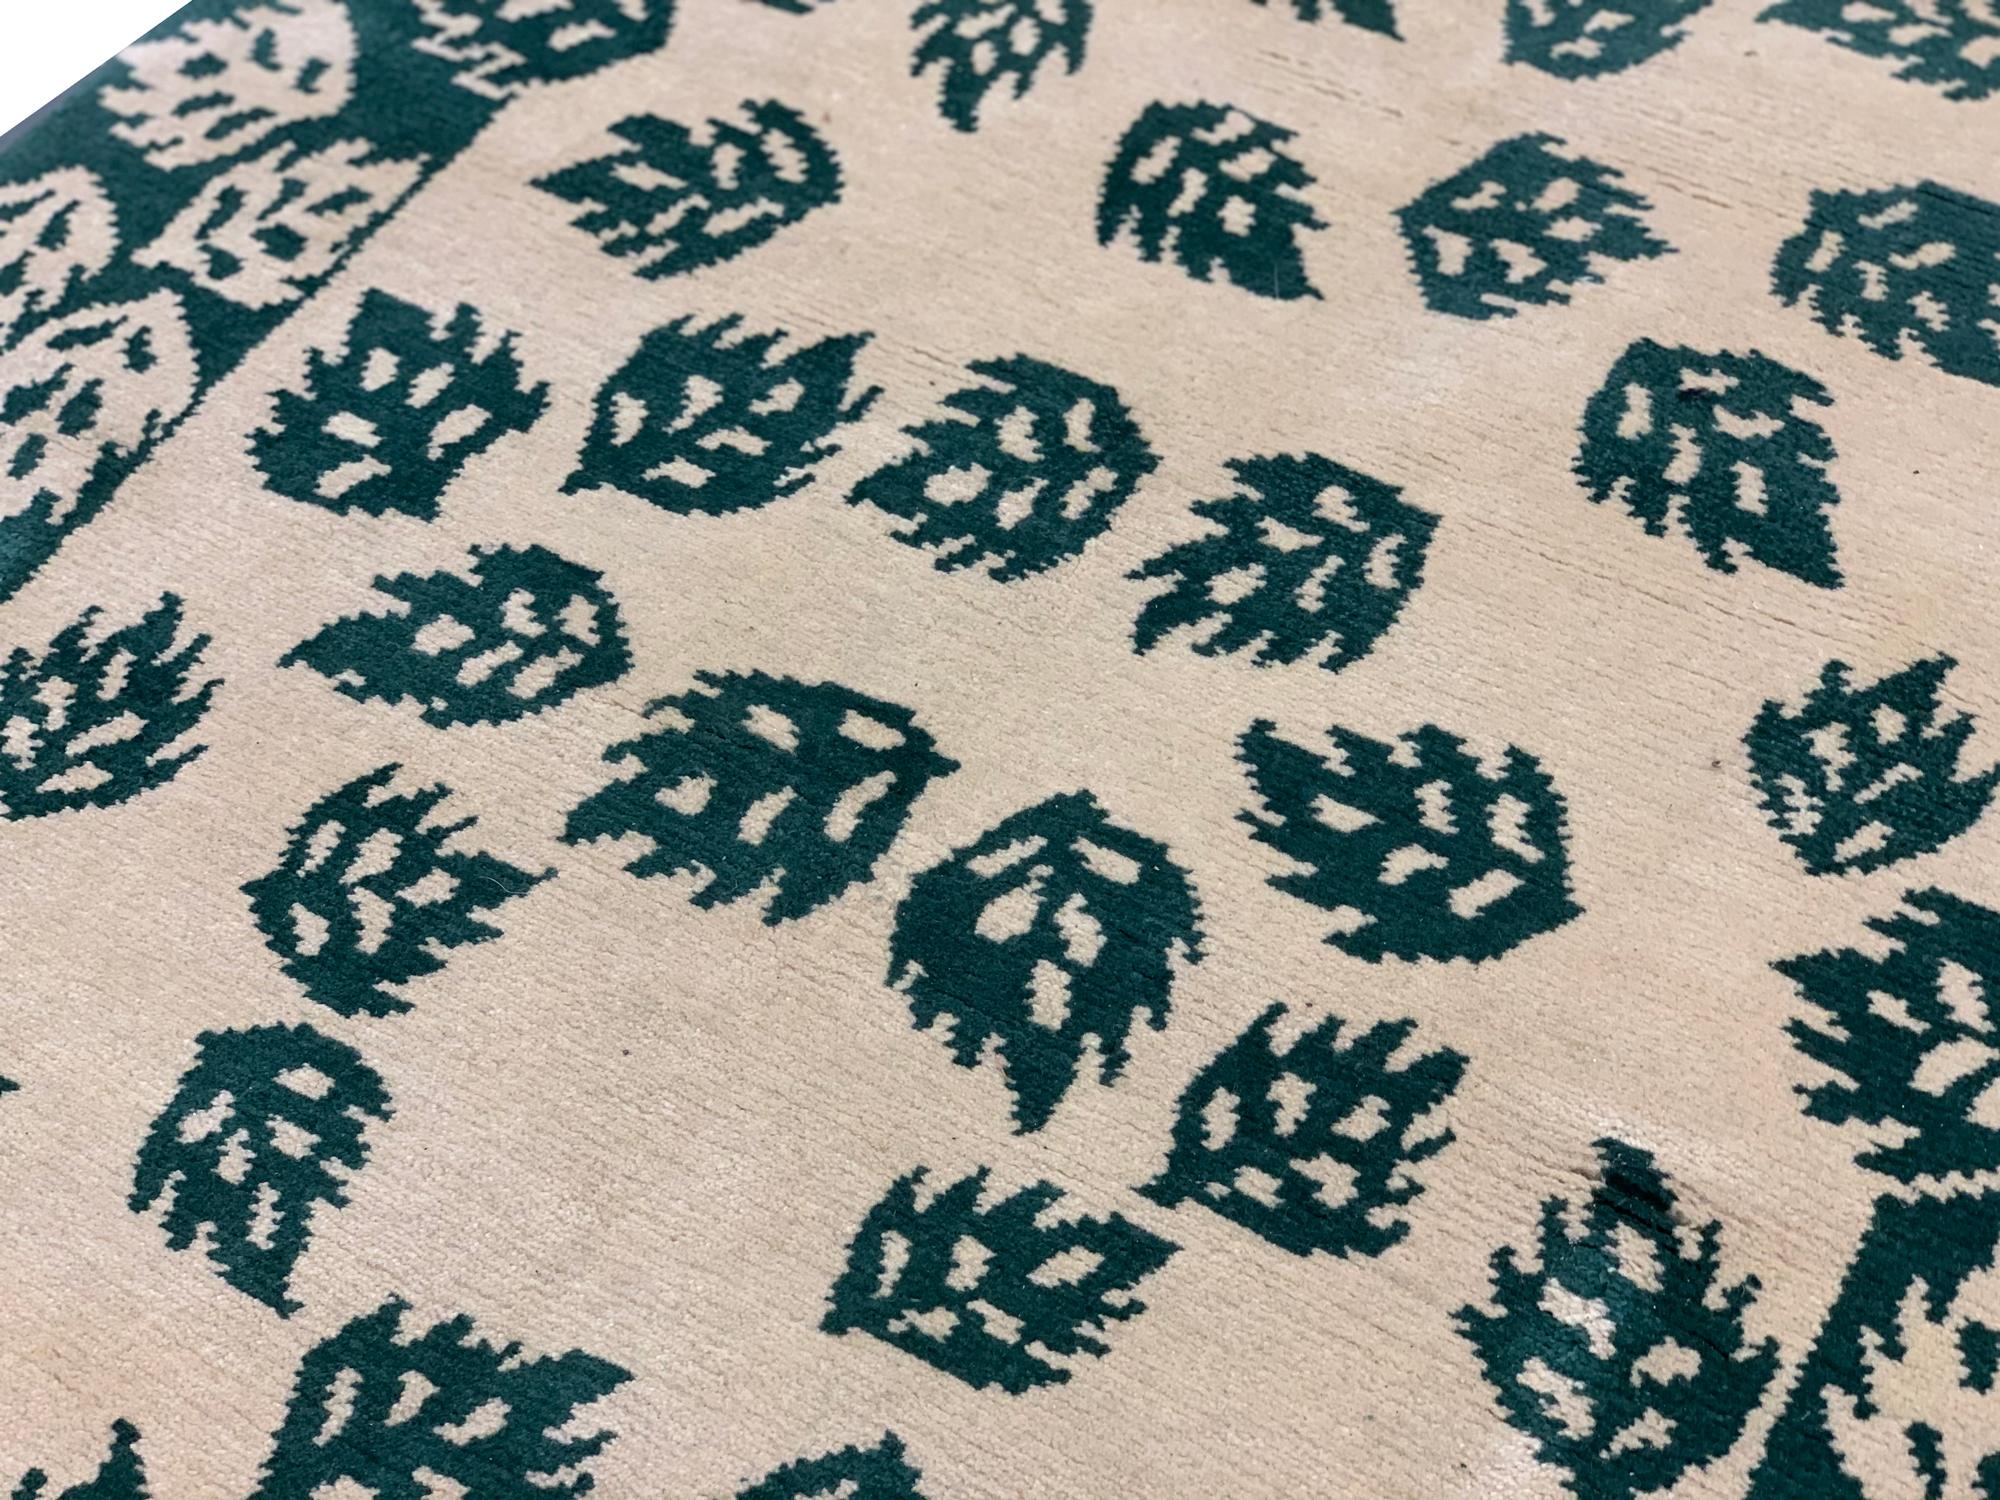 Vegetable Dyed Handmade Carpet Modern Rug Green Cream Wool Area Rug for Home Decor For Sale